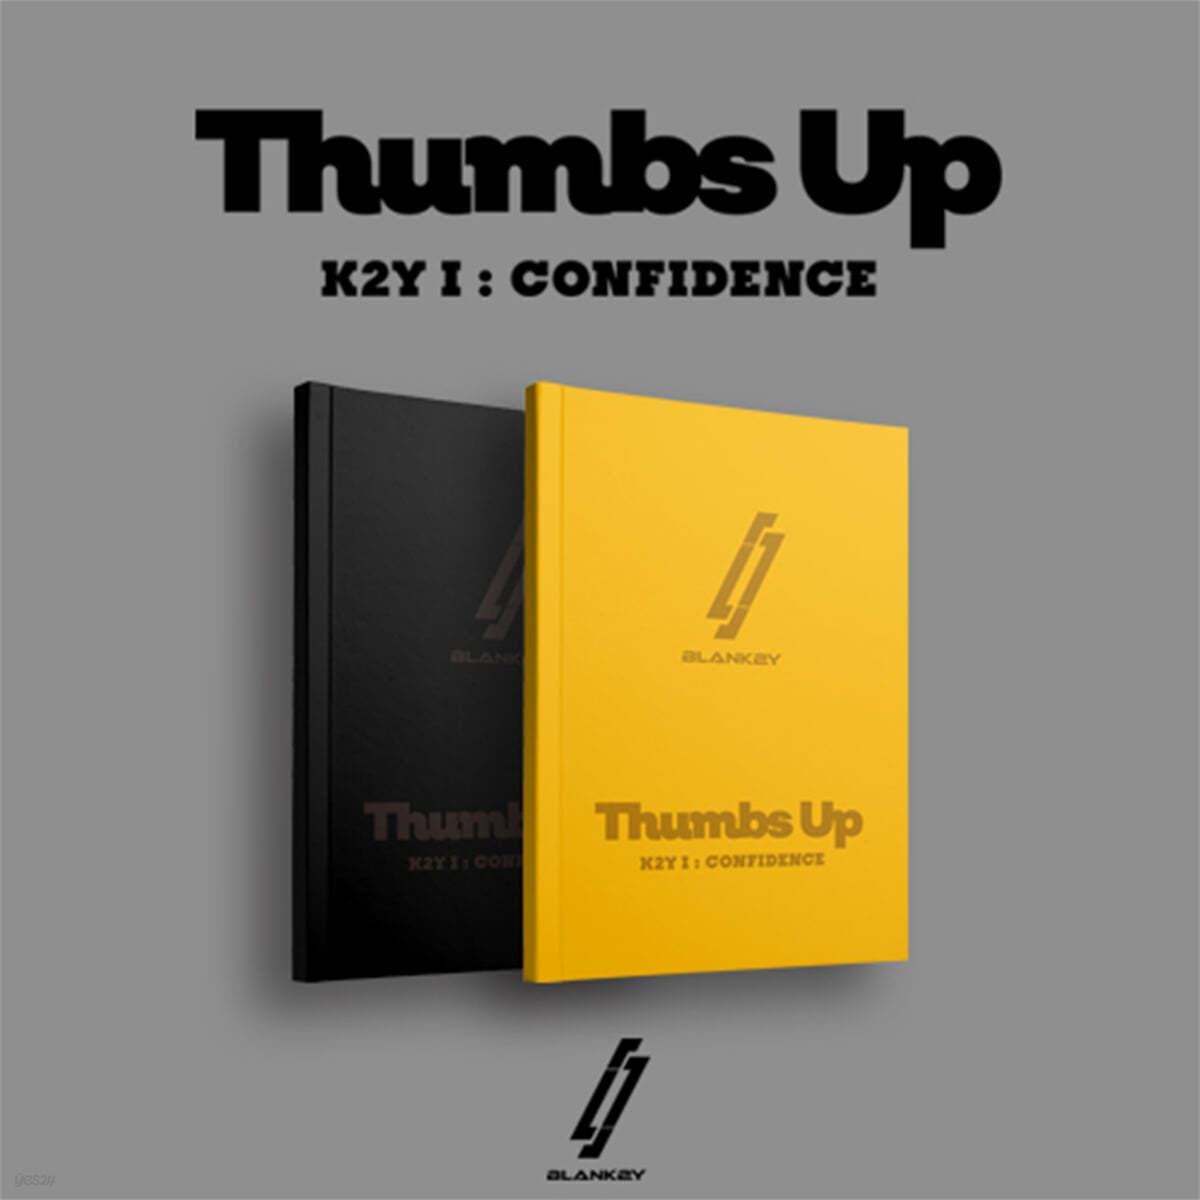 BLANK2Y (블랭키) - 미니앨범 1집 : K2Y I : CONFIDENCE [Thumbs Up][SET]